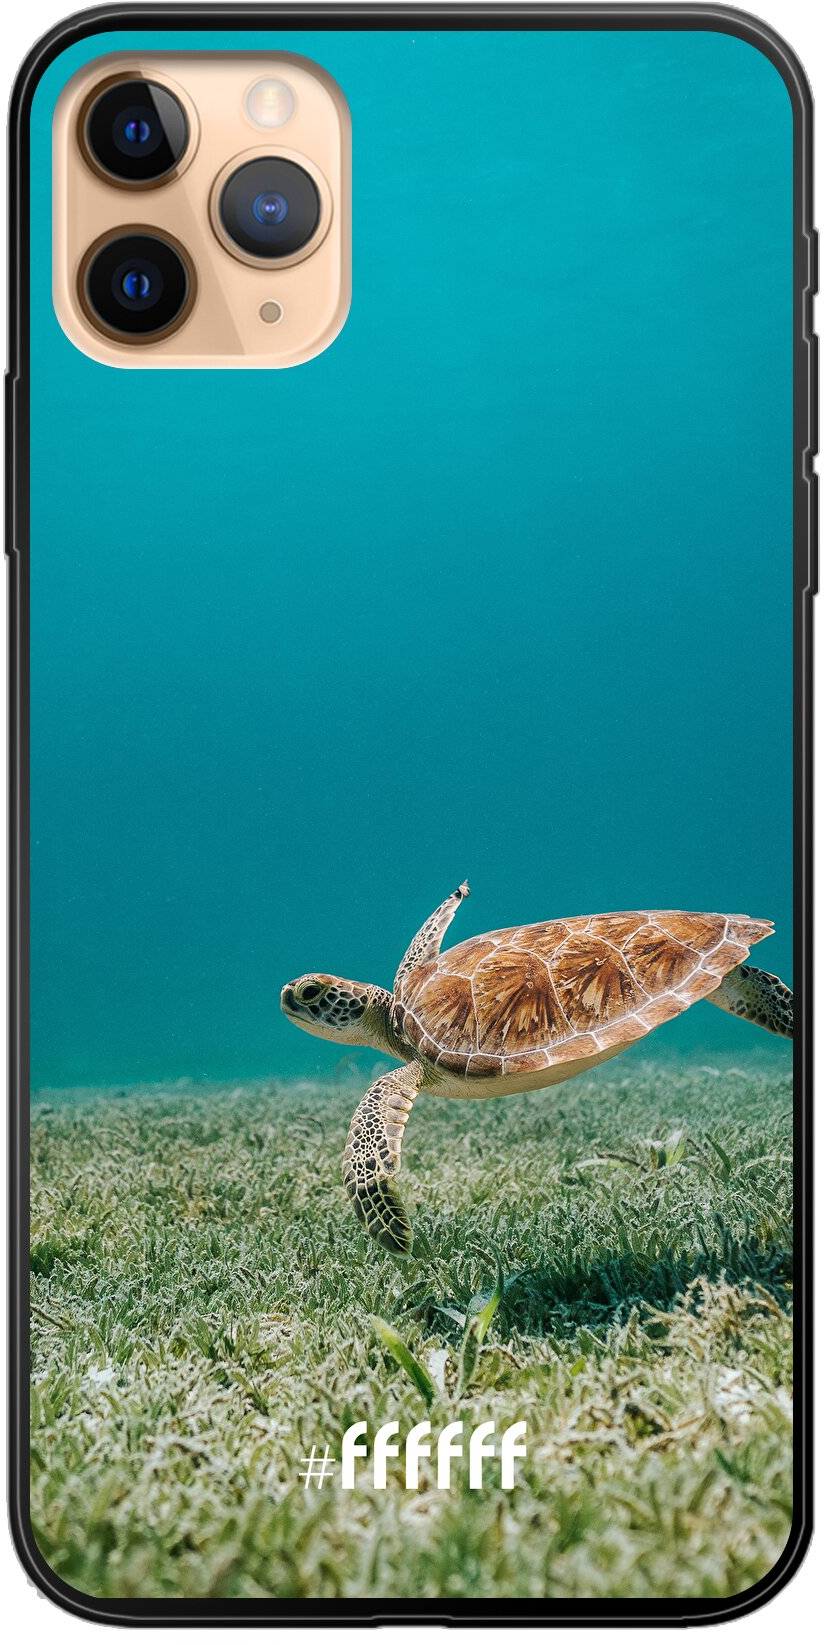 Turtle iPhone 11 Pro Max